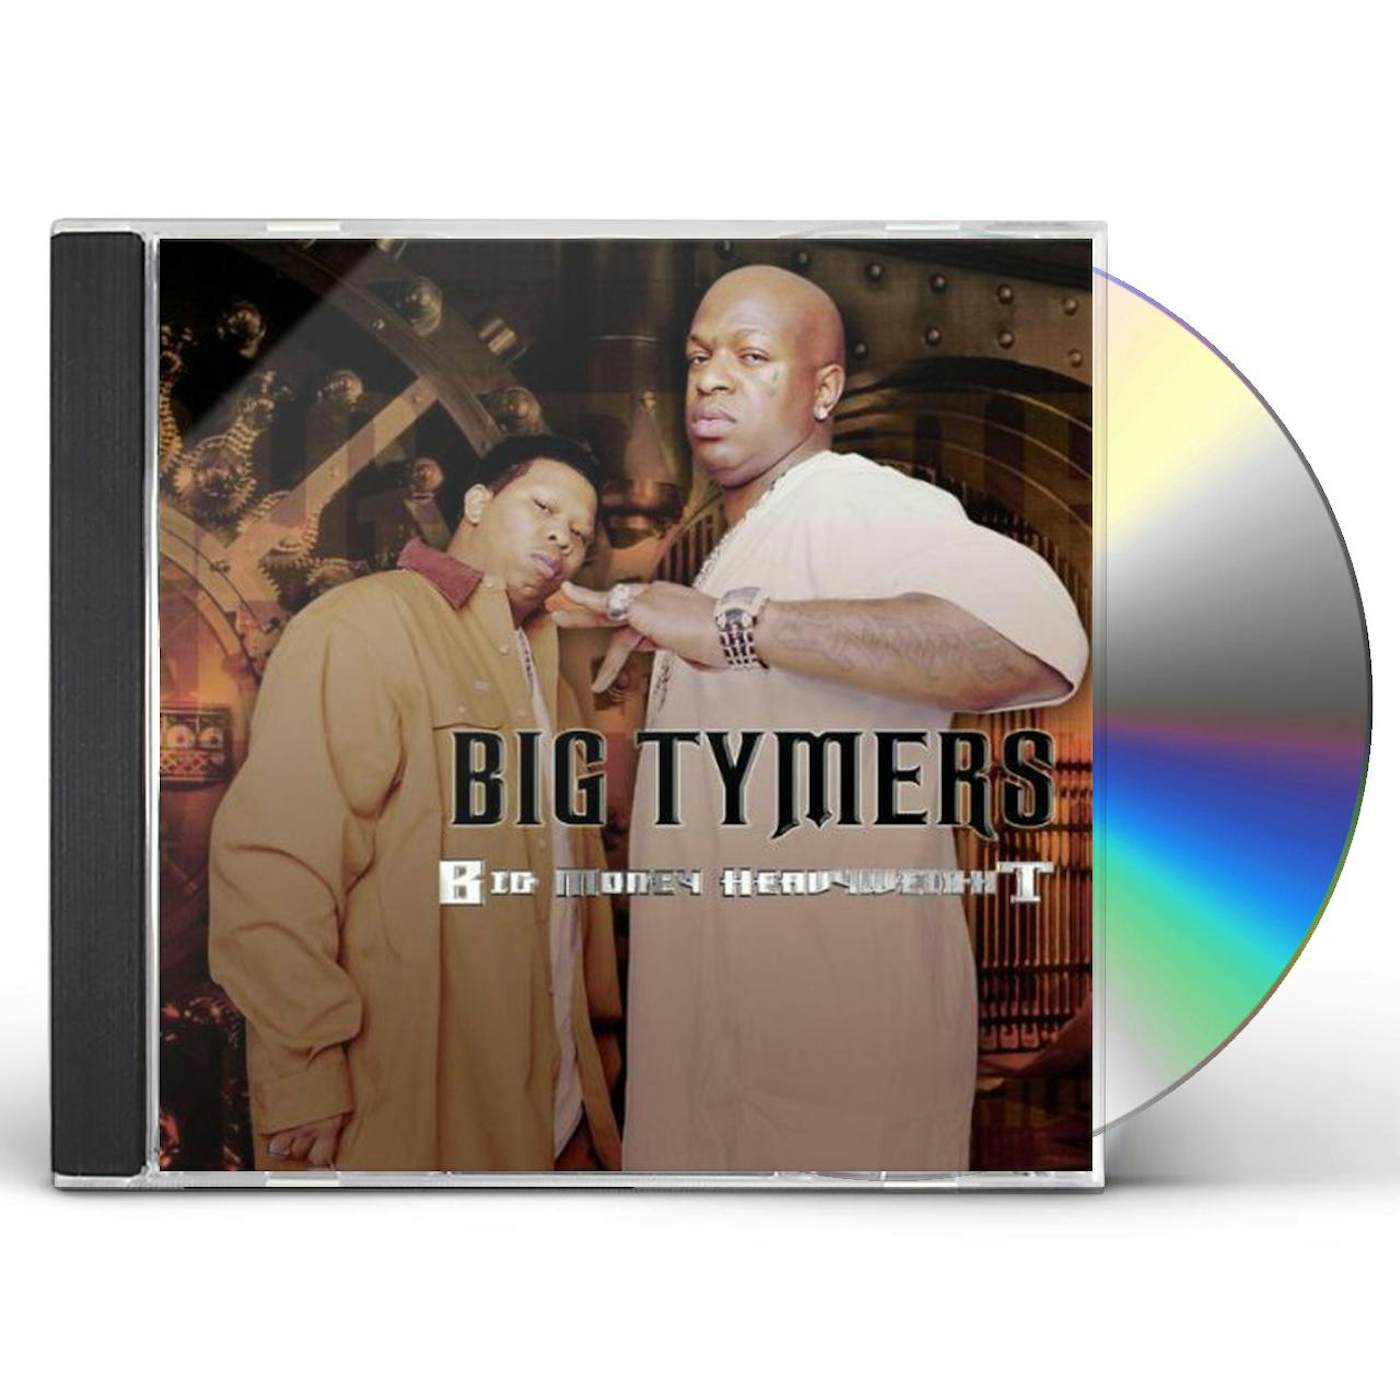 Big Tymers BIG MONEY HEAVYWIGHT CD